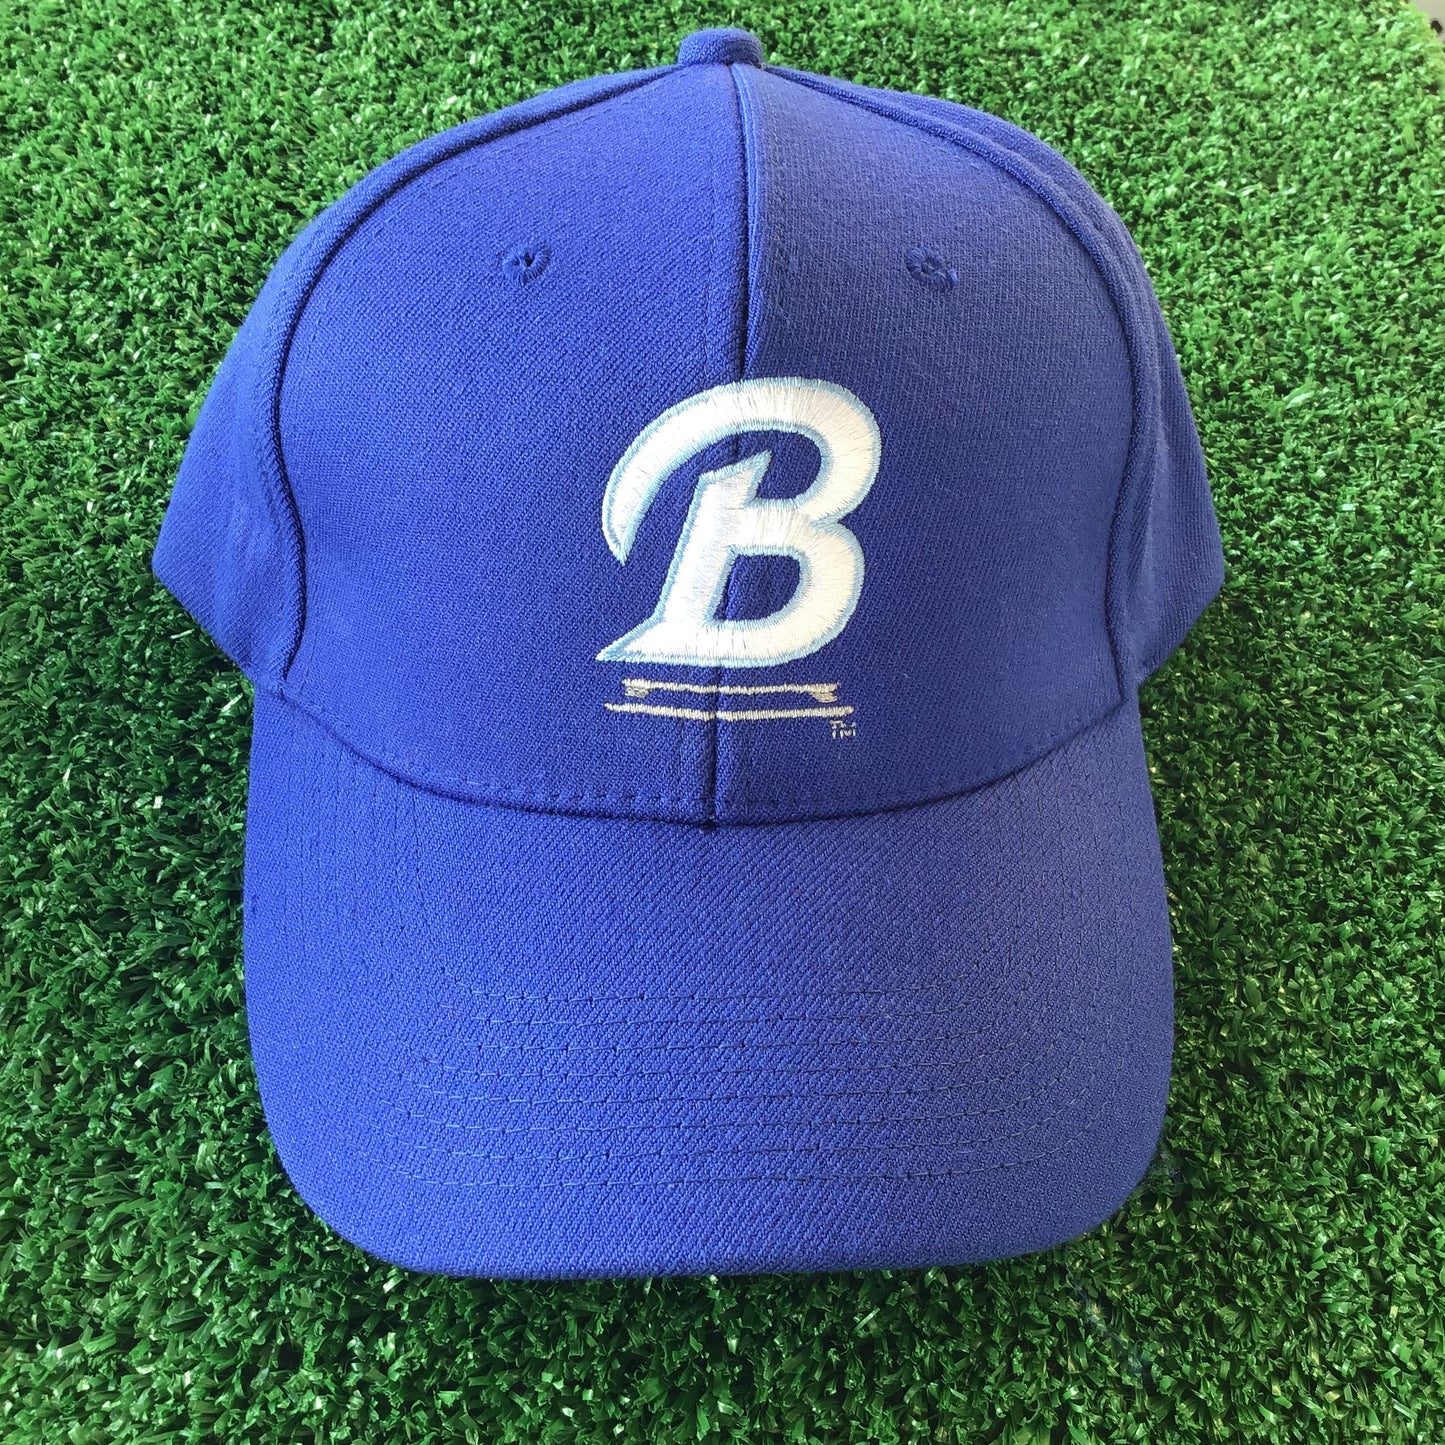 B Logo Blue Rounded Bill